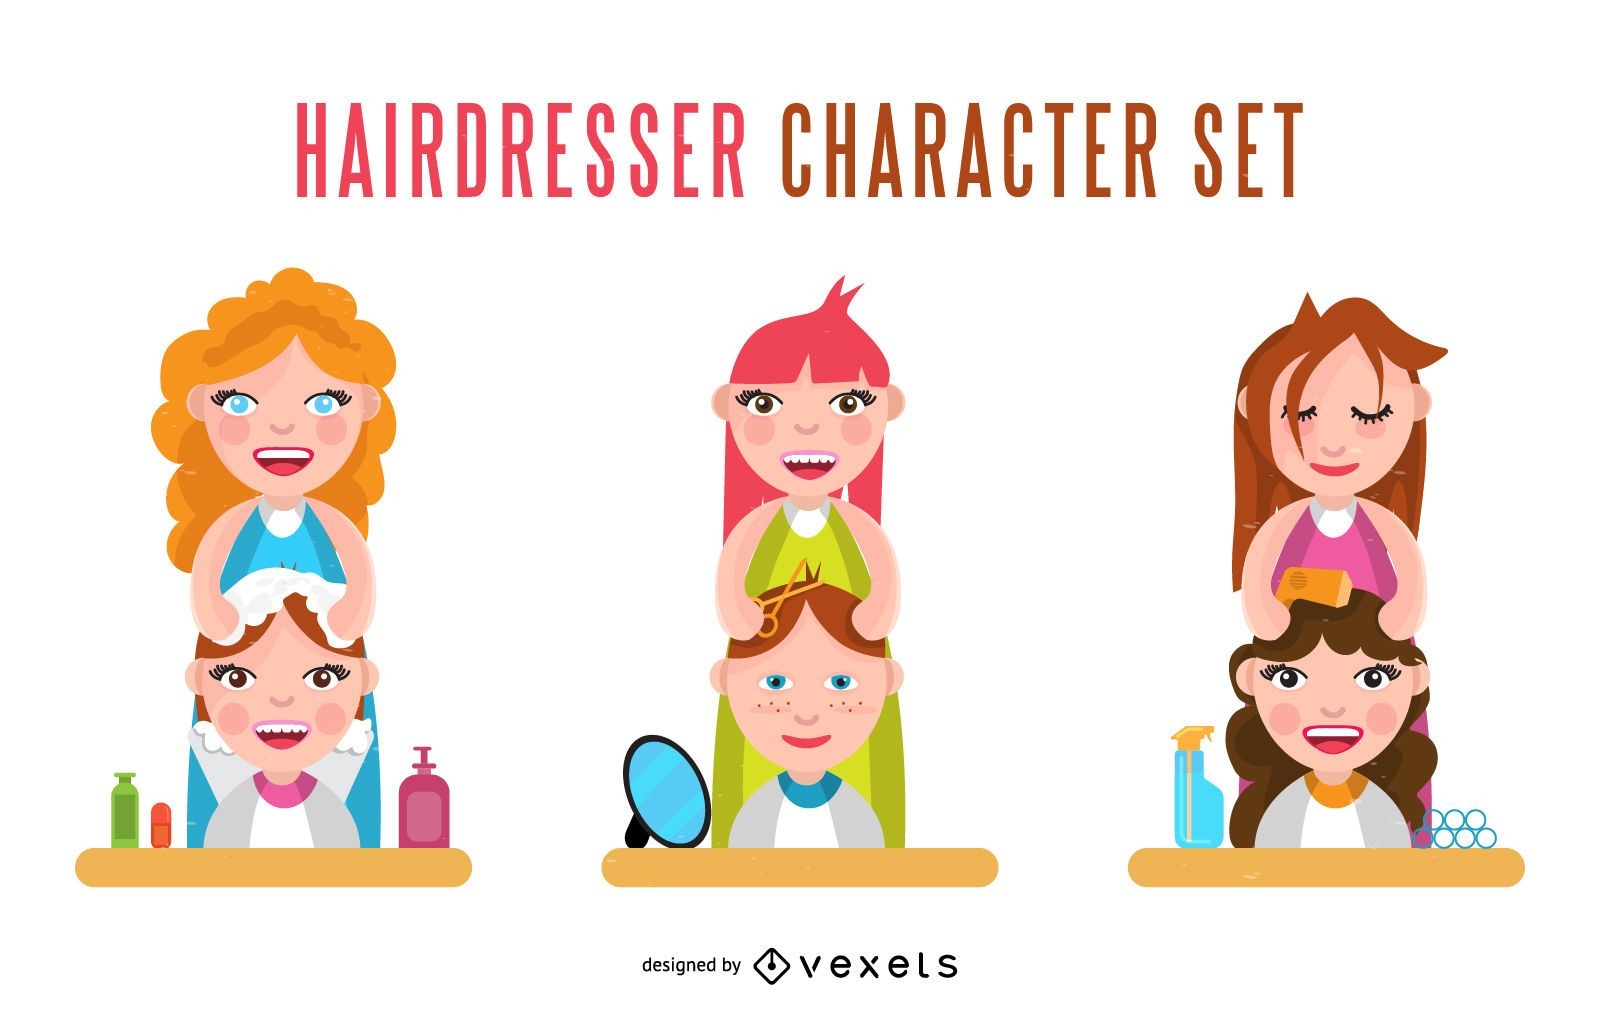 Hairdresser character set